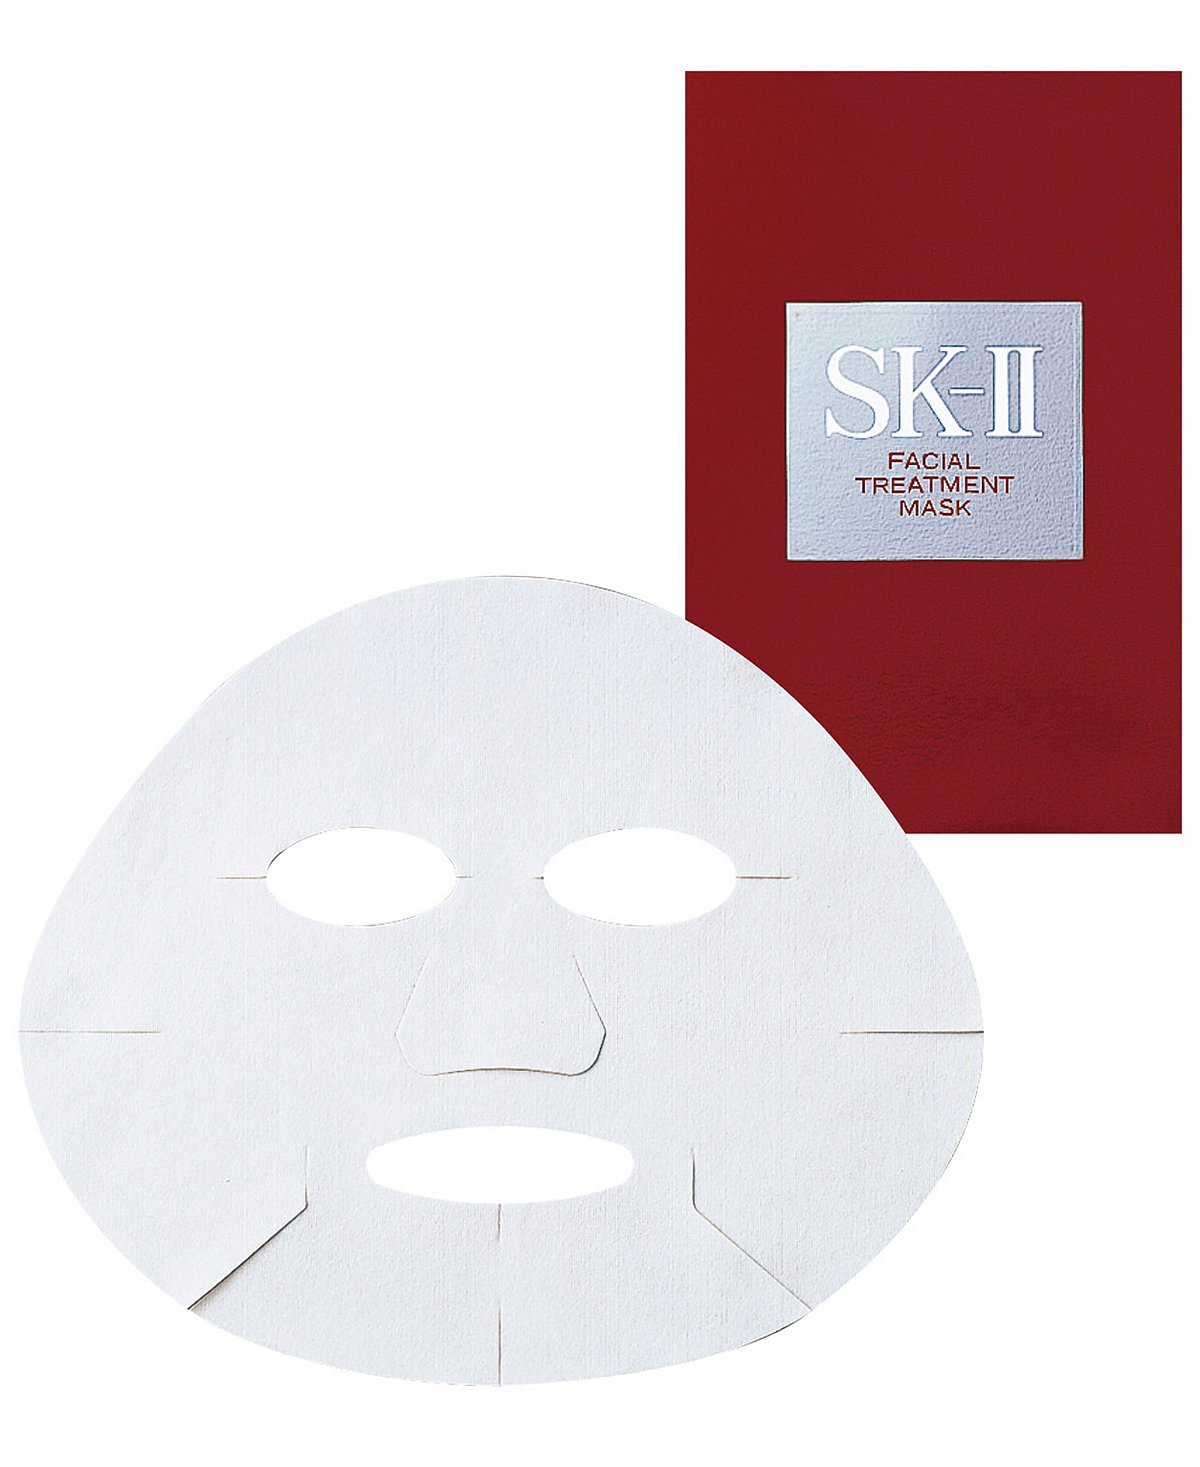 SK-II Facial Treatment Mask, 10 sheets - eCosmeticWorld